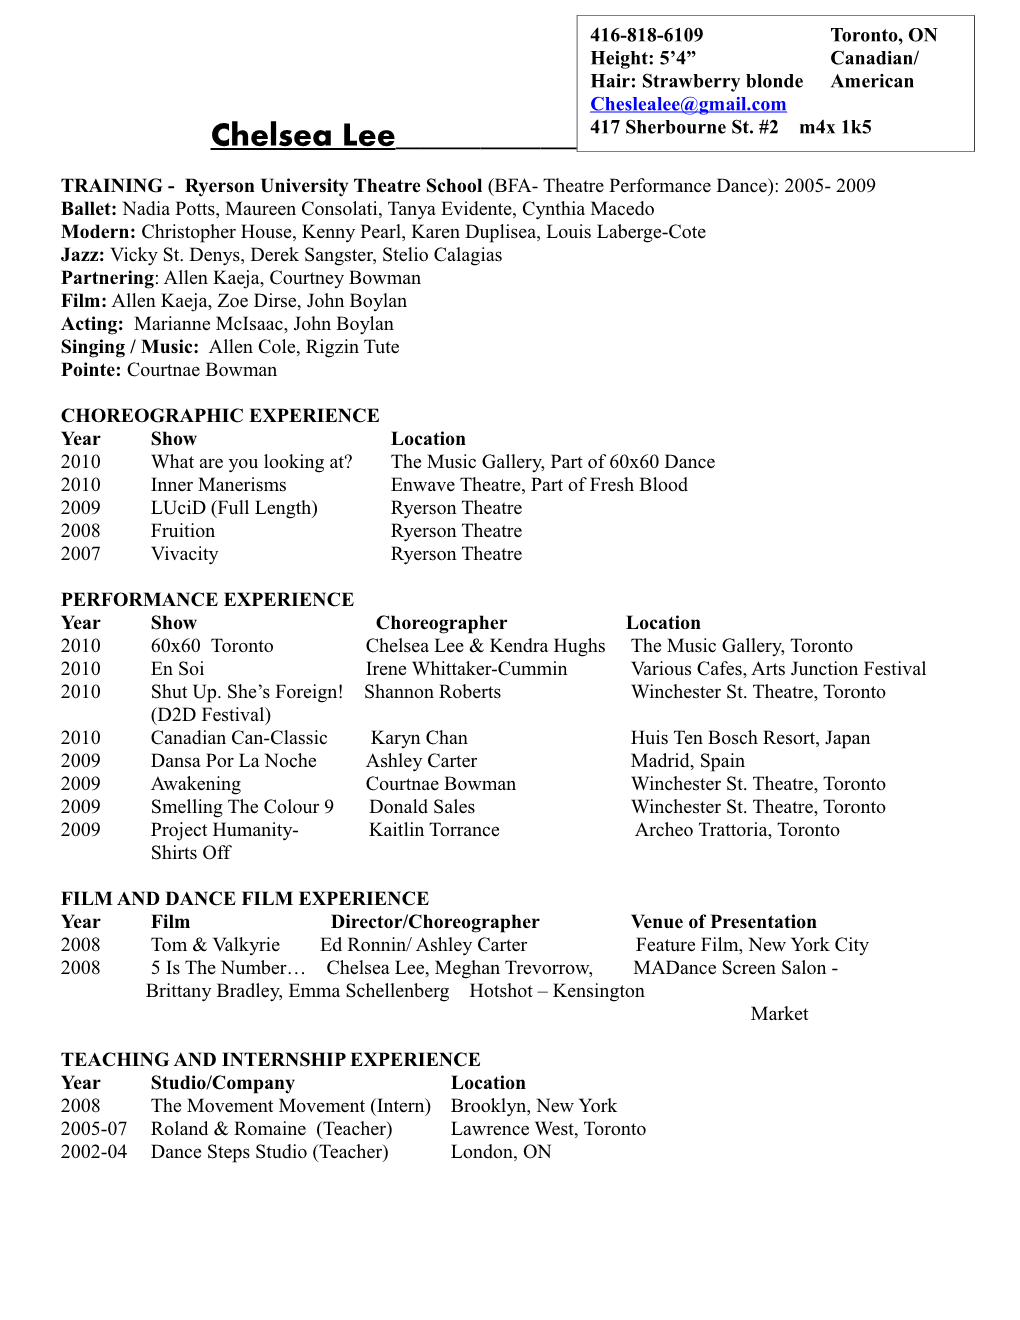 TRAINING - Ryerson University Theatre School (BFA- Theatre Performance Dance): 2005- 2009